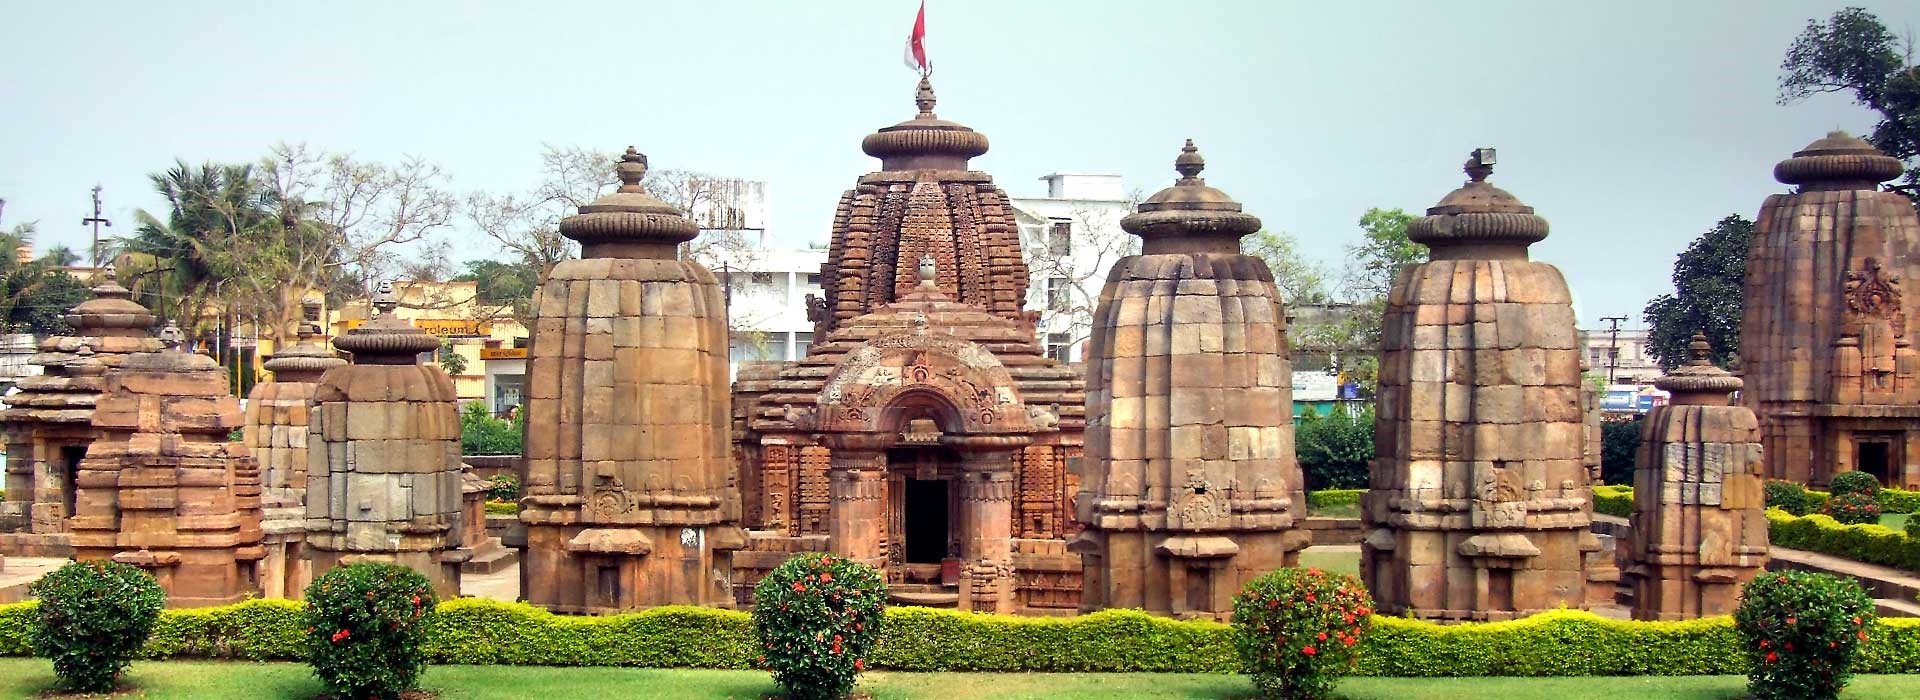 essay on traditional architecture of odisha